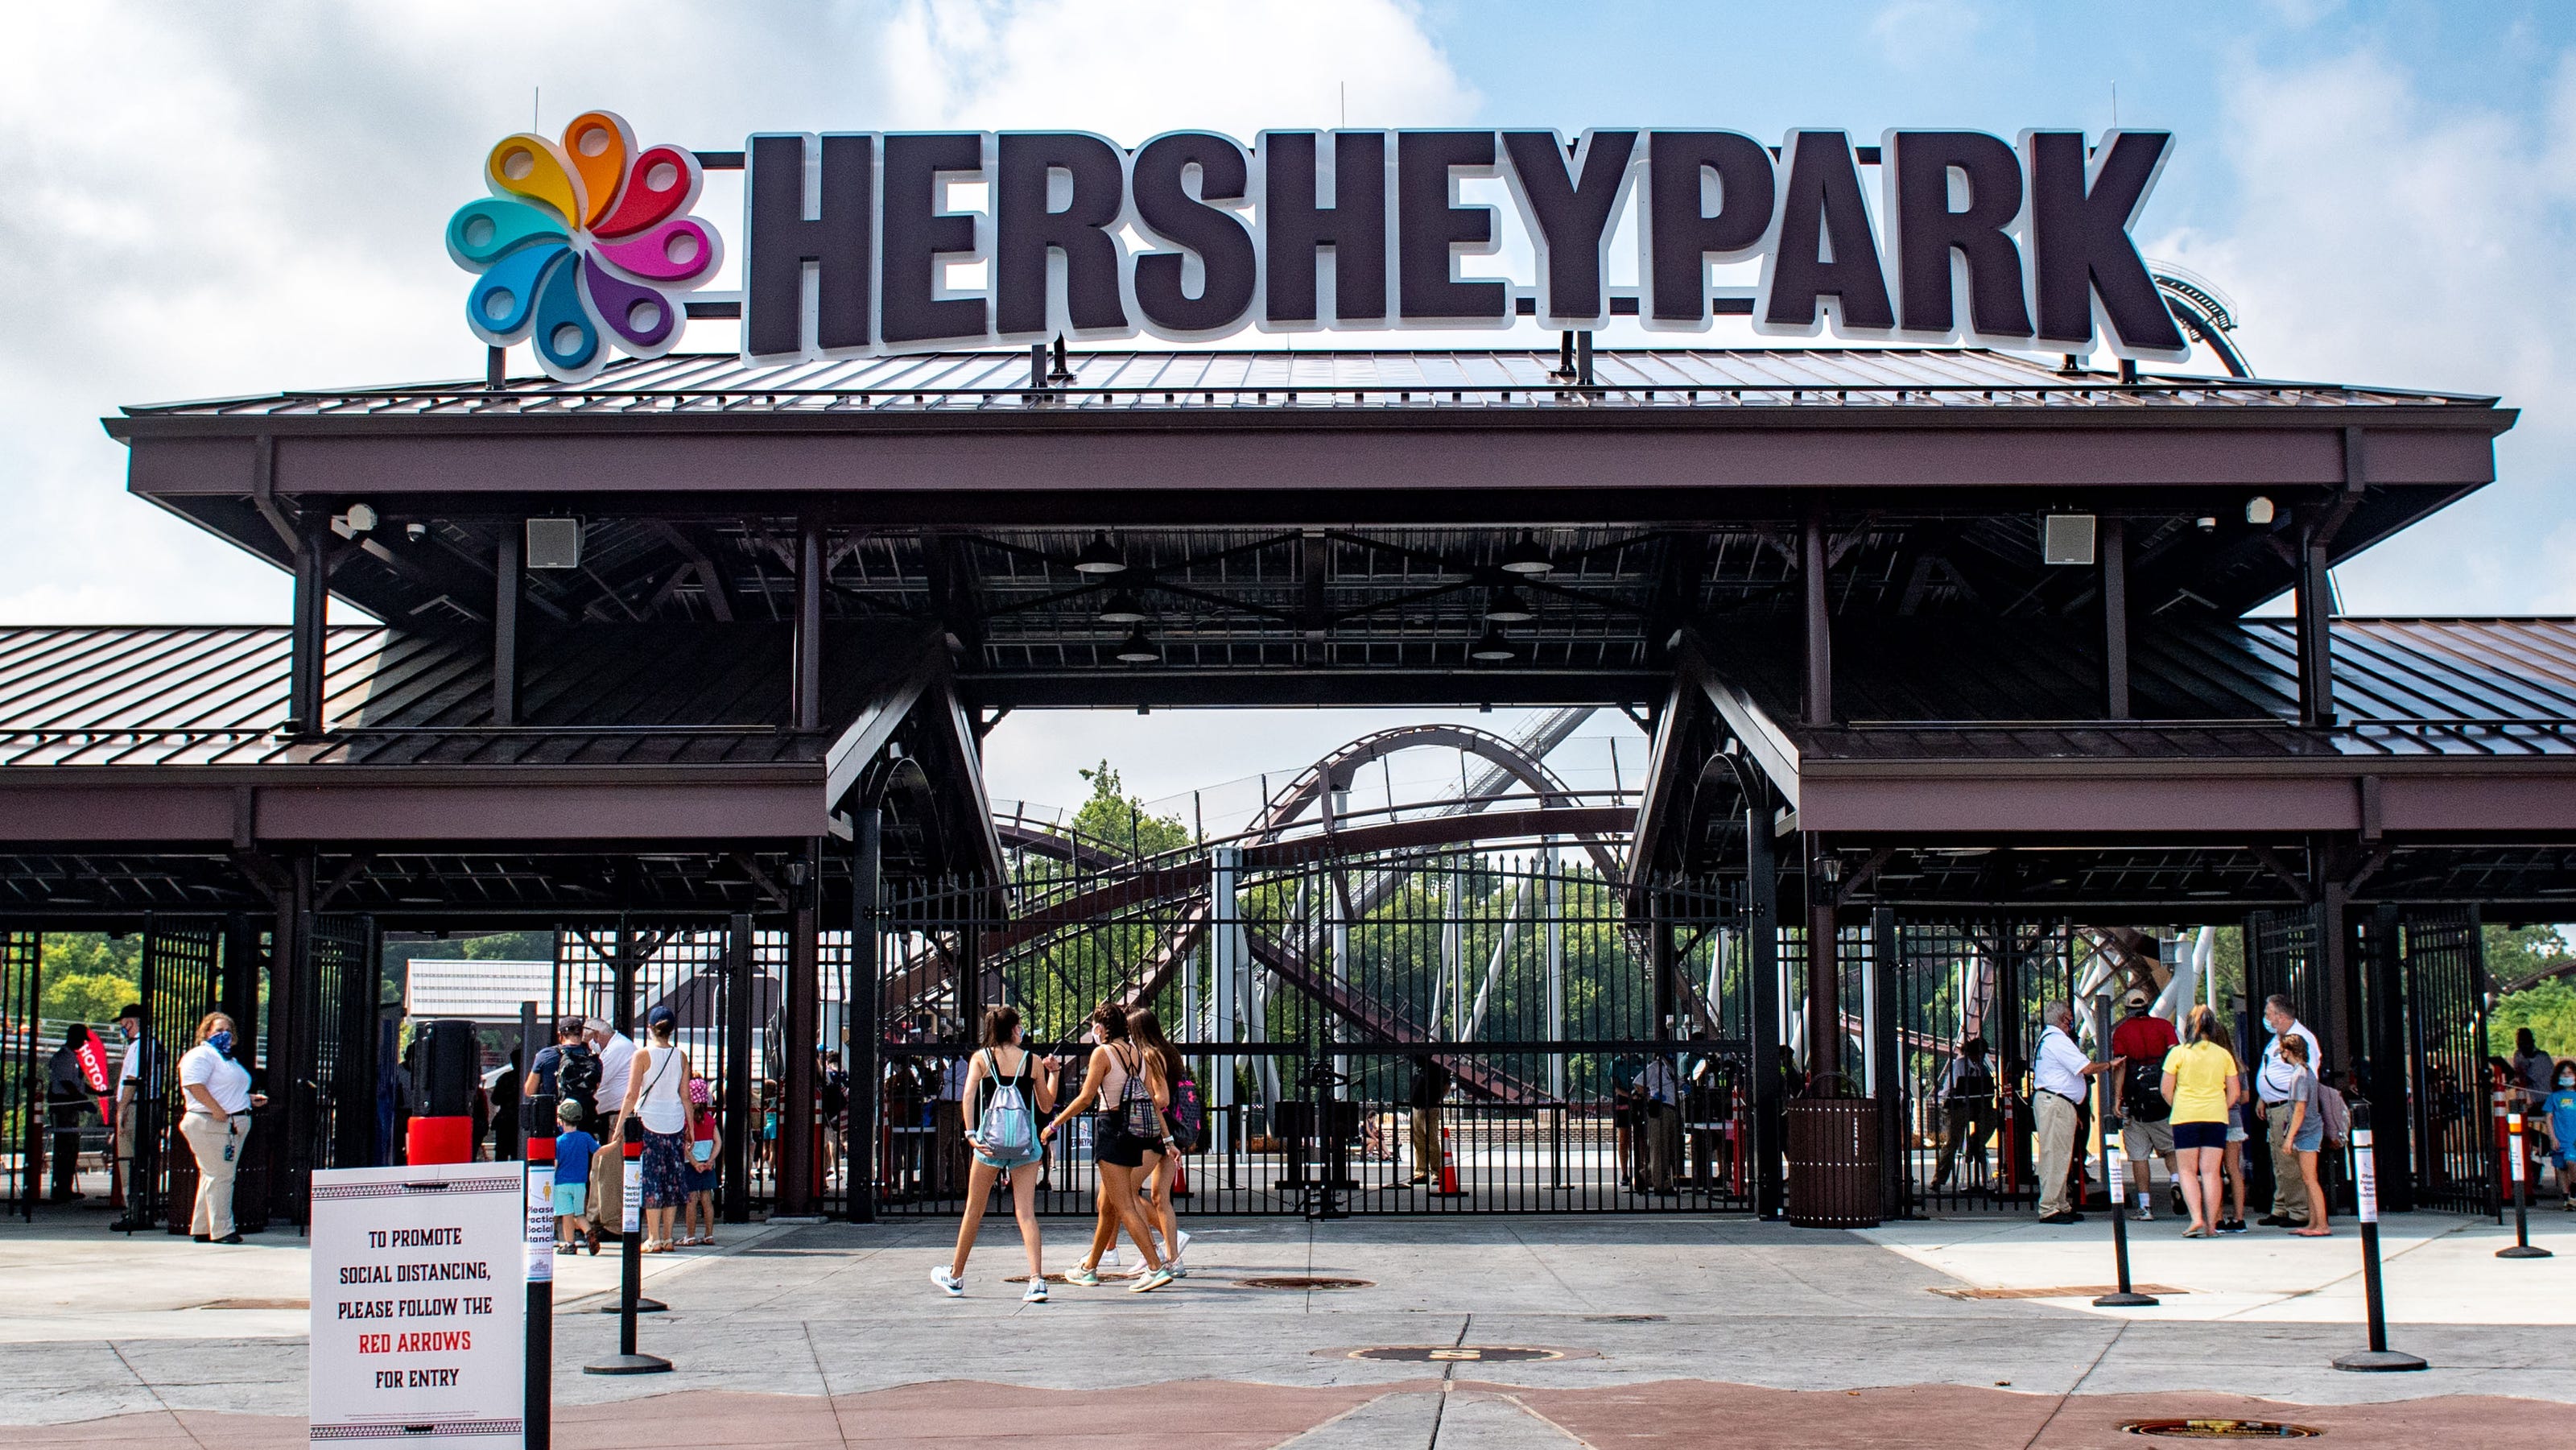 Hersheypark opens in Pennsylvania amid COVID19